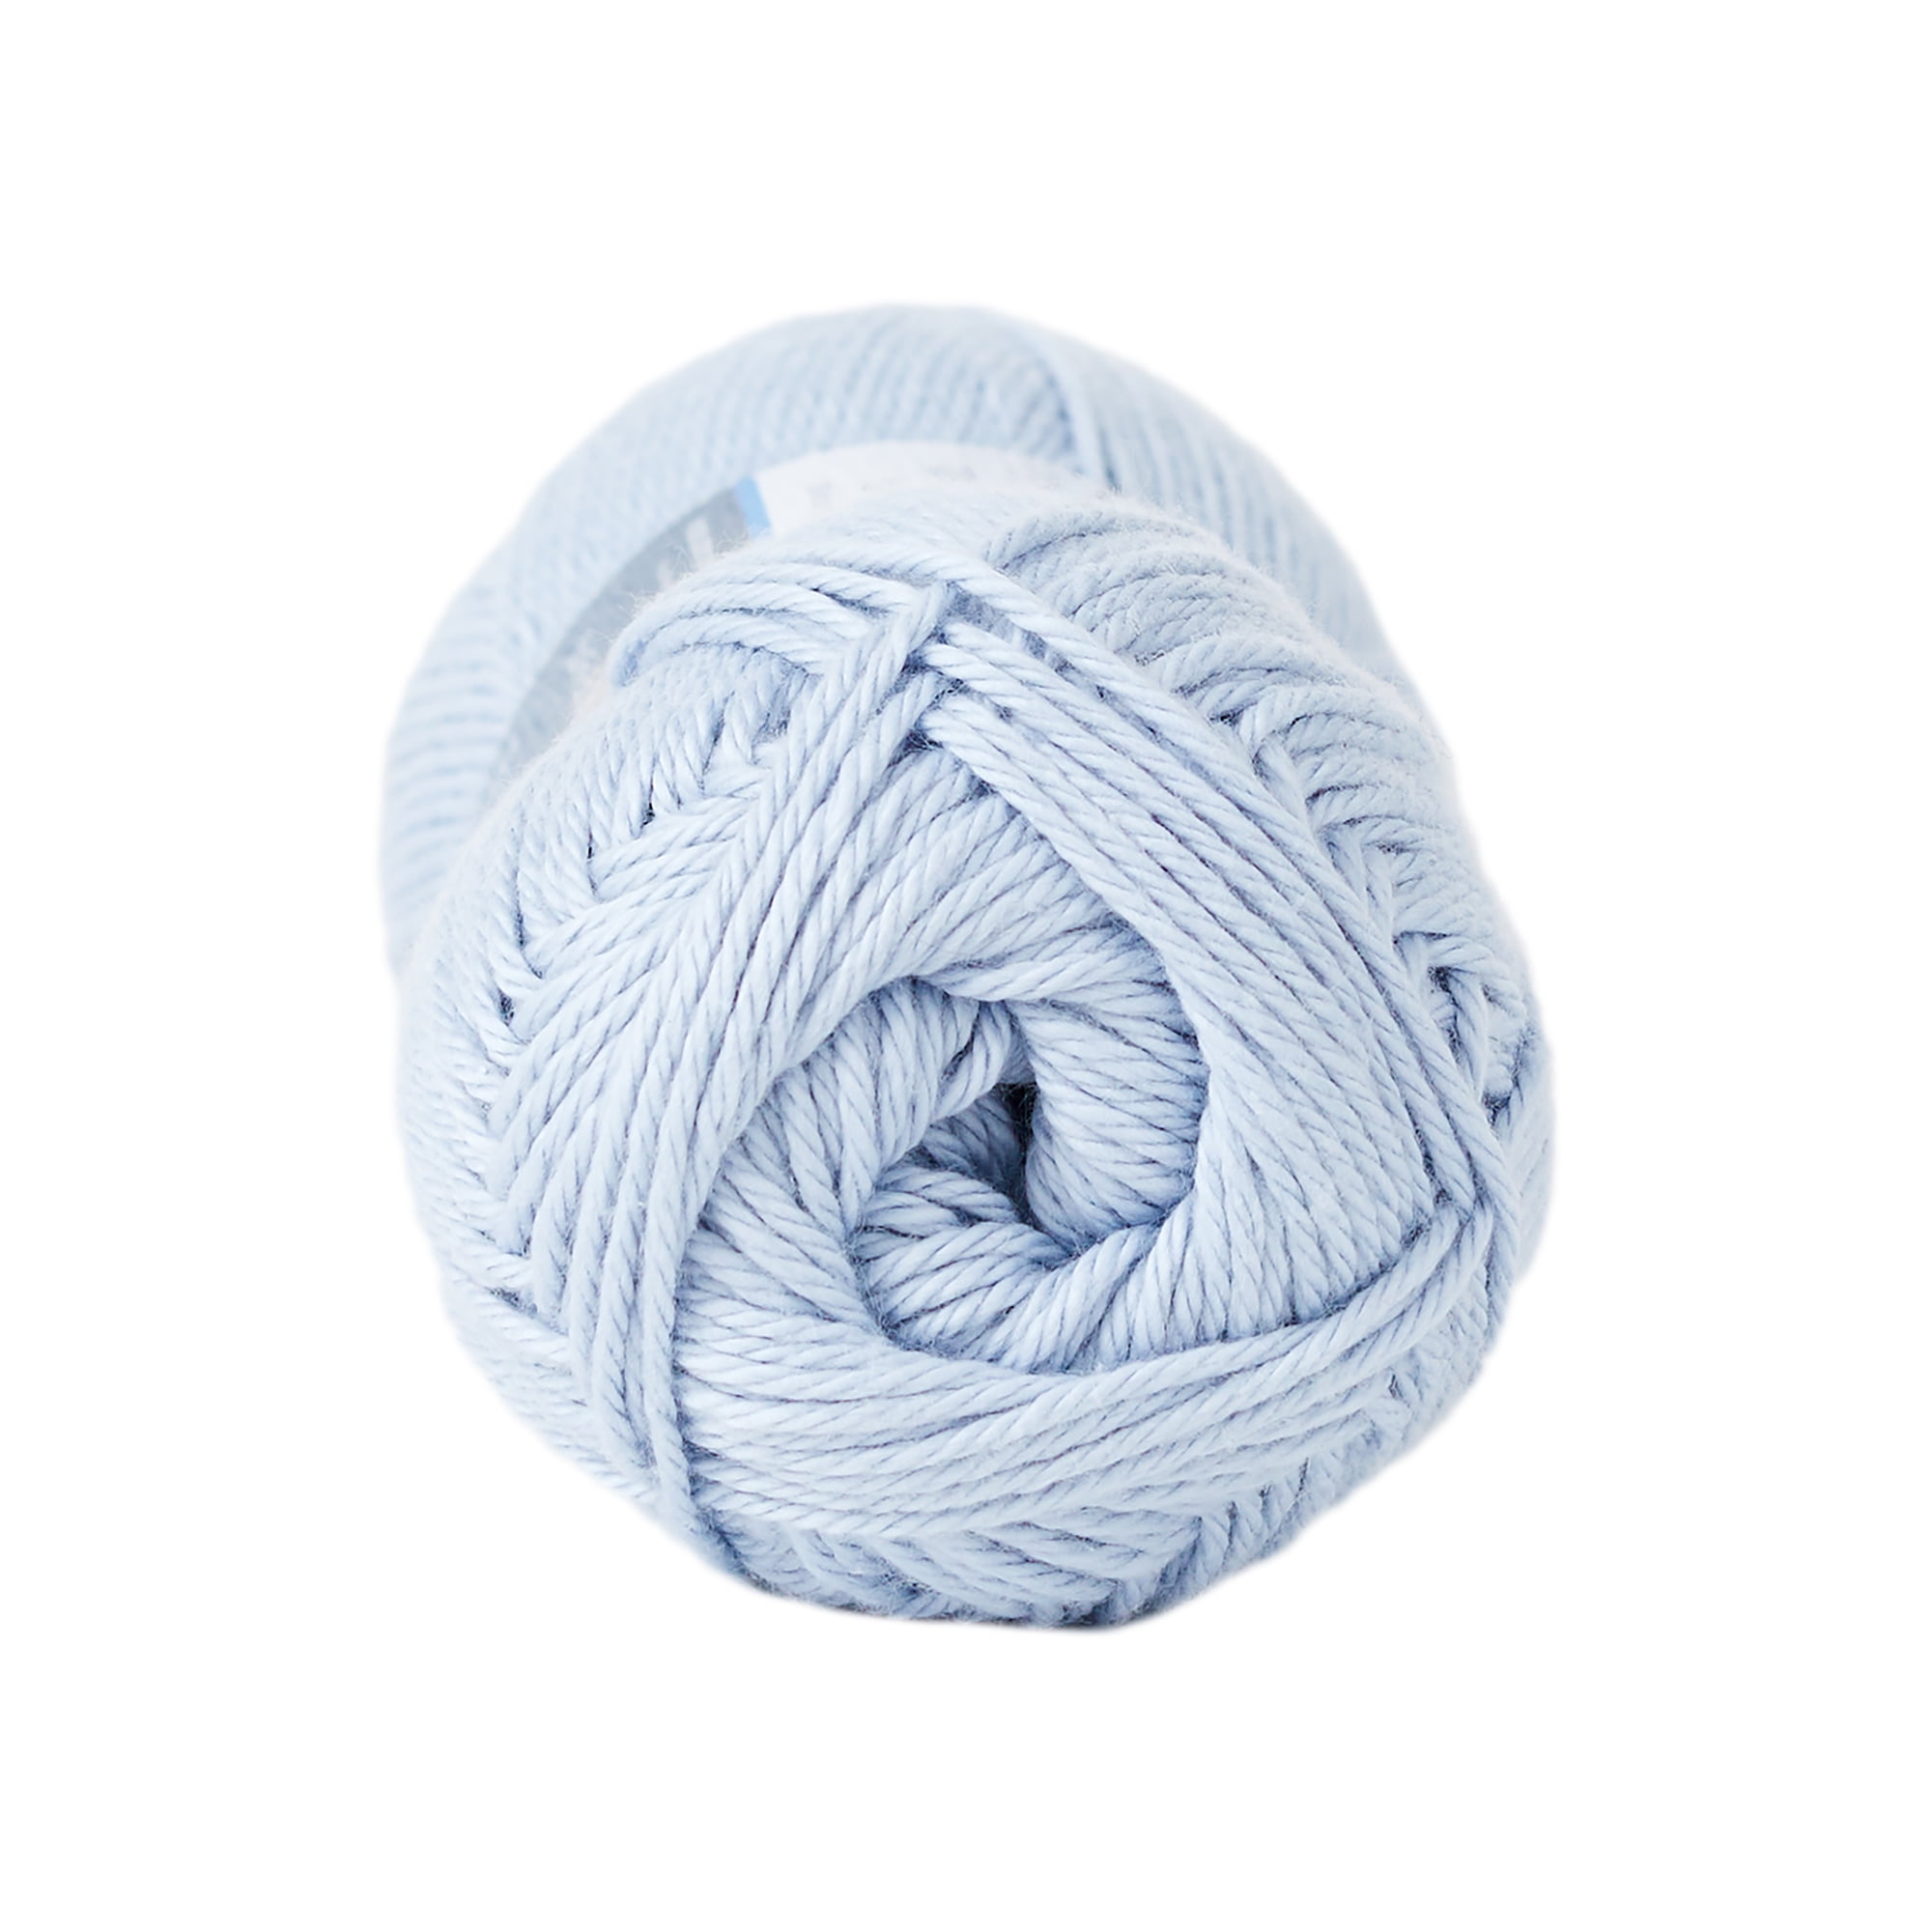 Mainstays 100% Cotton Yarn - Blue Shell - 3.5oz 180yds - 4 Medium